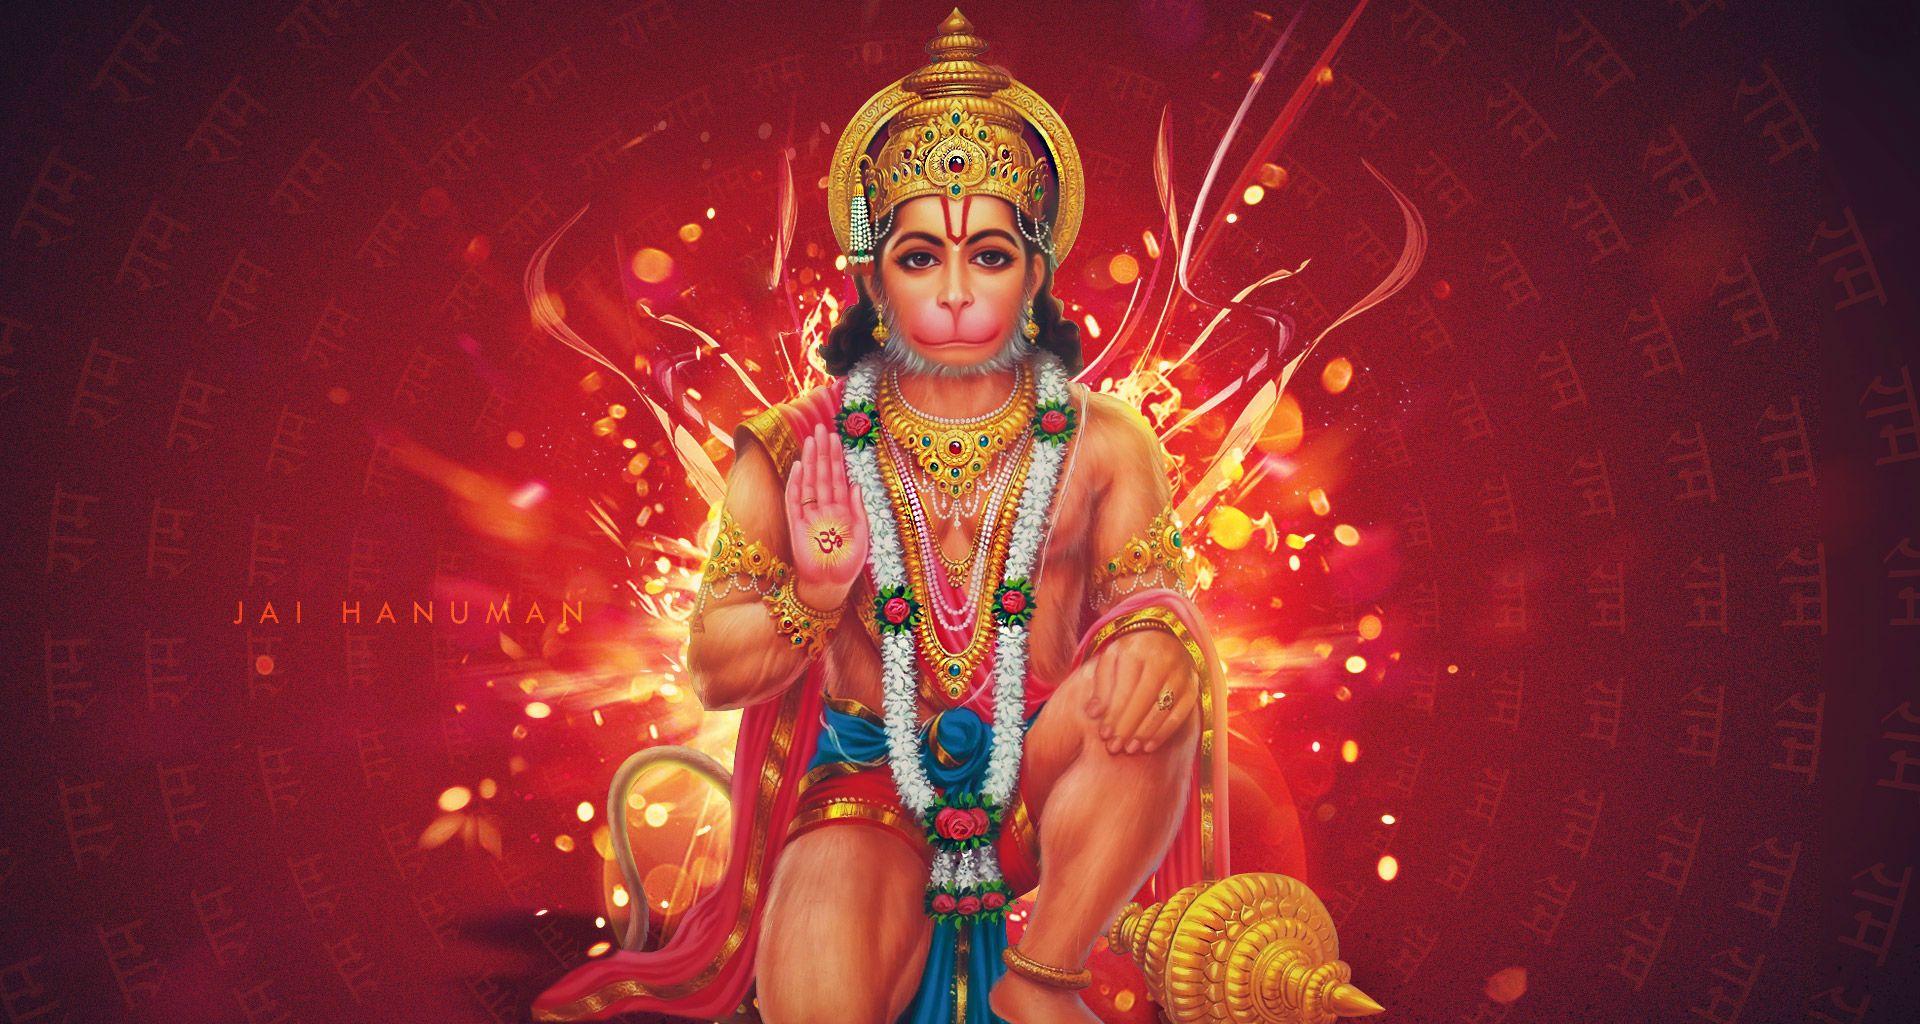 1080p Angry Hanuman Wallpaper HD Images & Photos Download